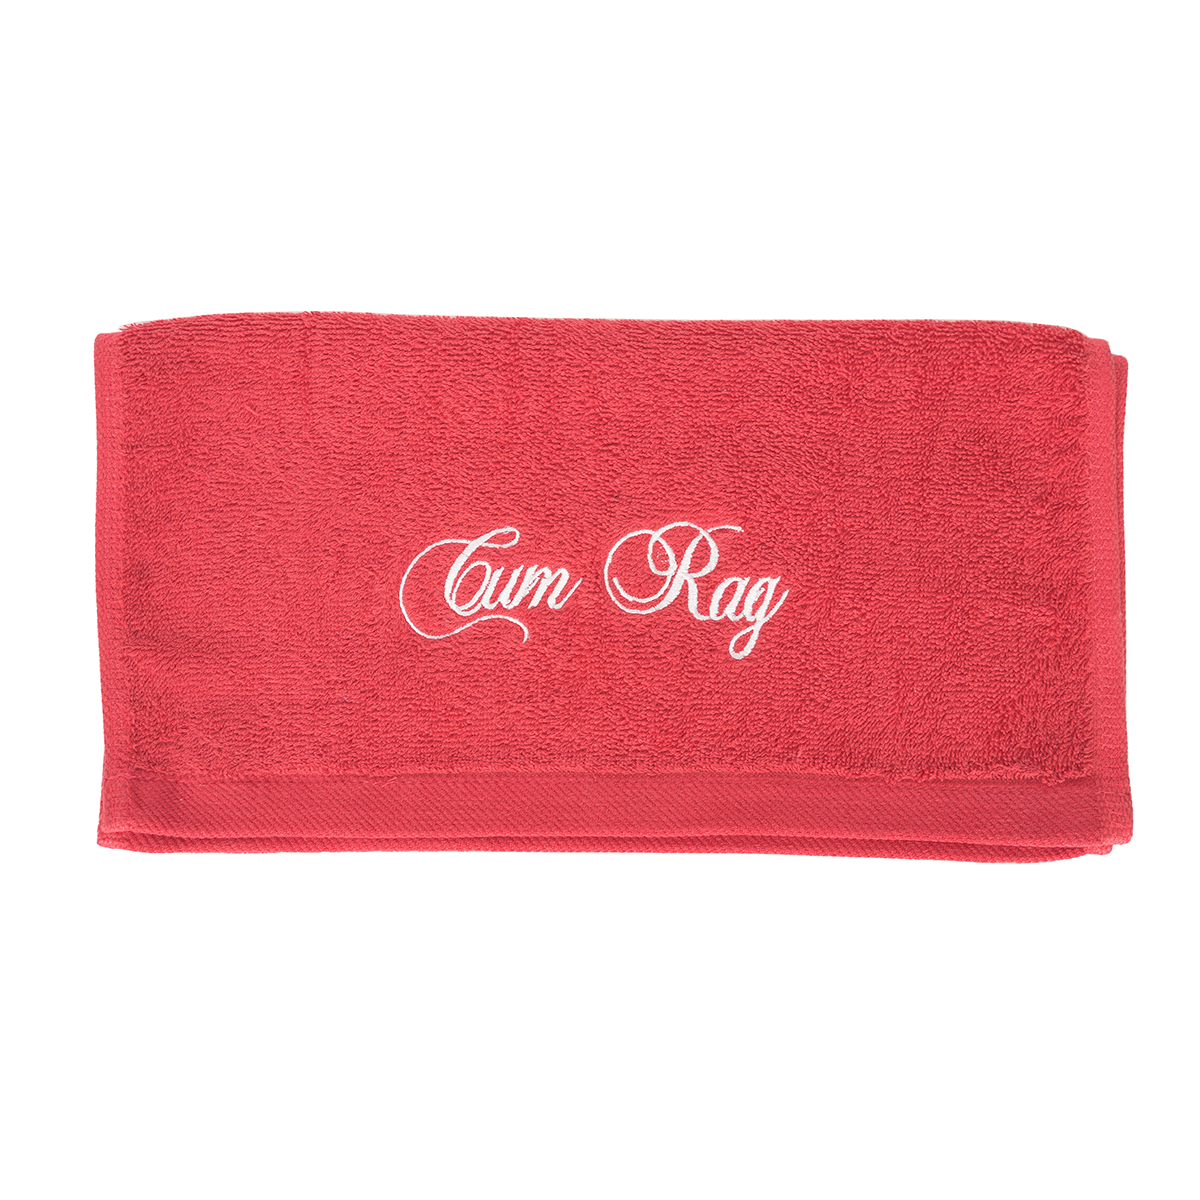 Cum Rag Towel – Countrytastic Creations